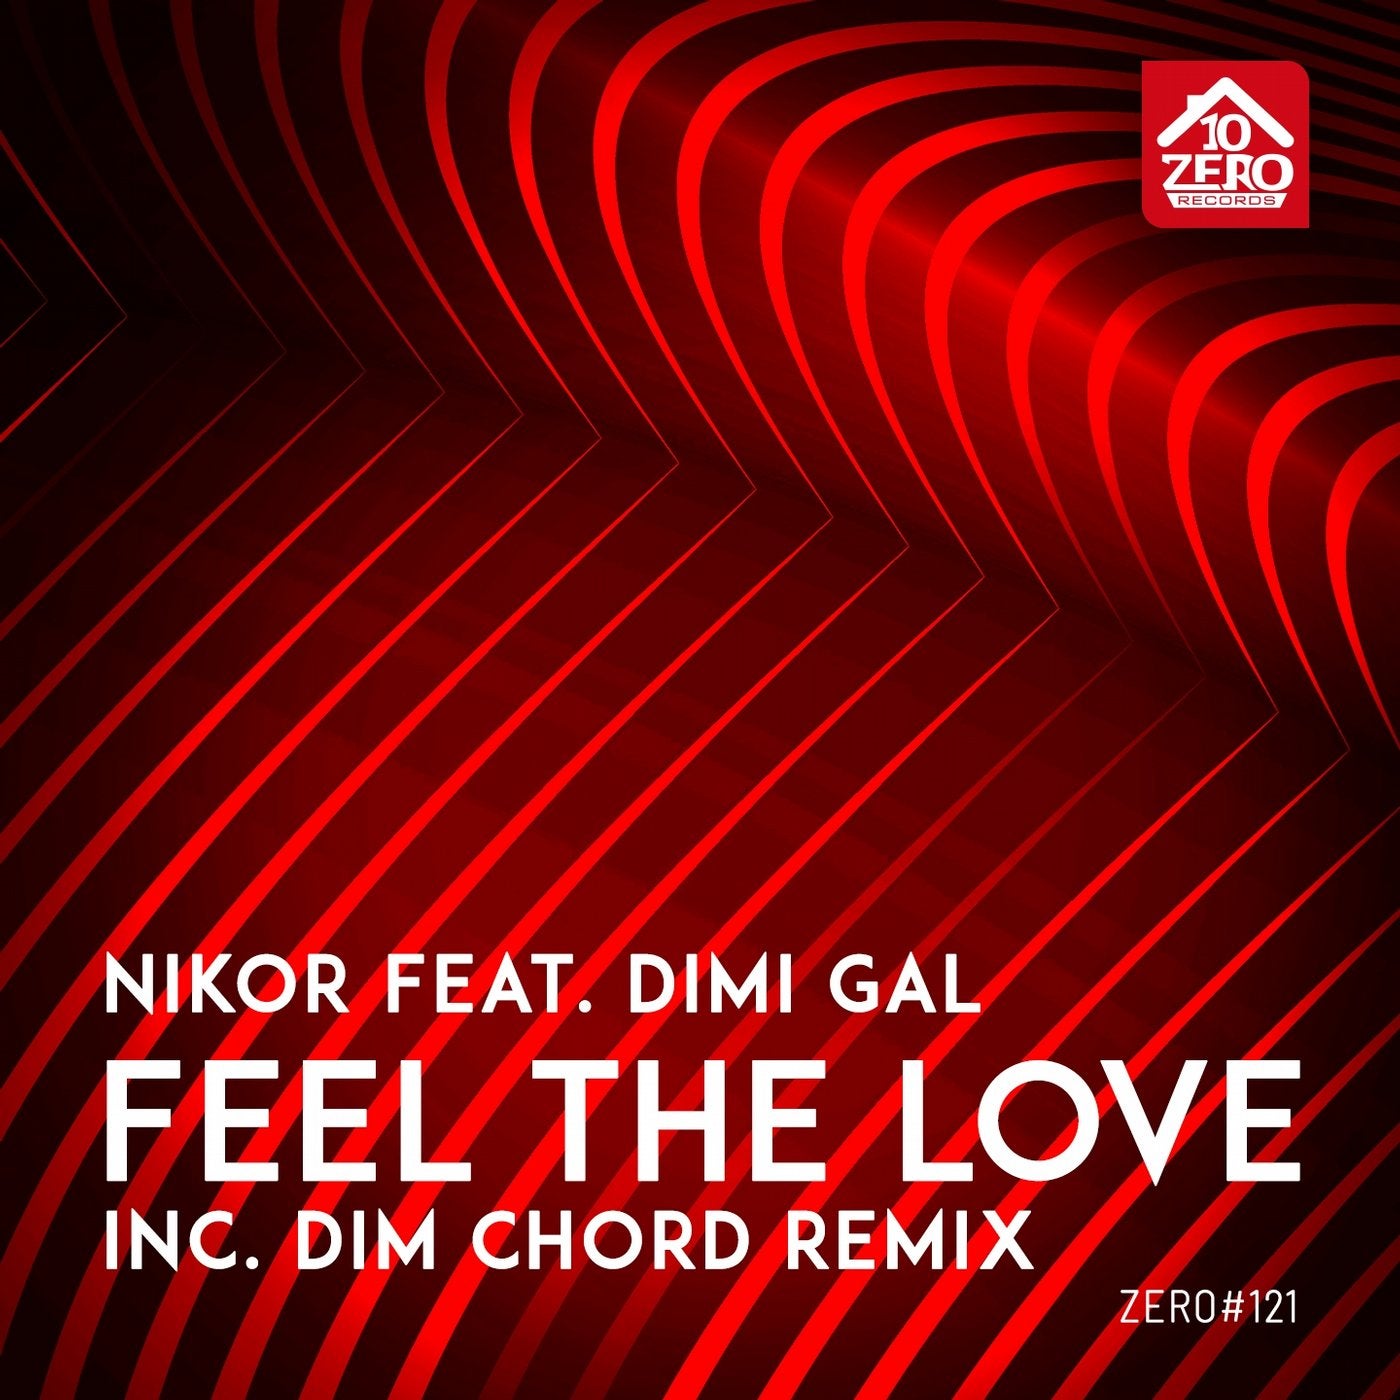 Feel the love (feat. Dimi Gal) [Dim Chord Remix]